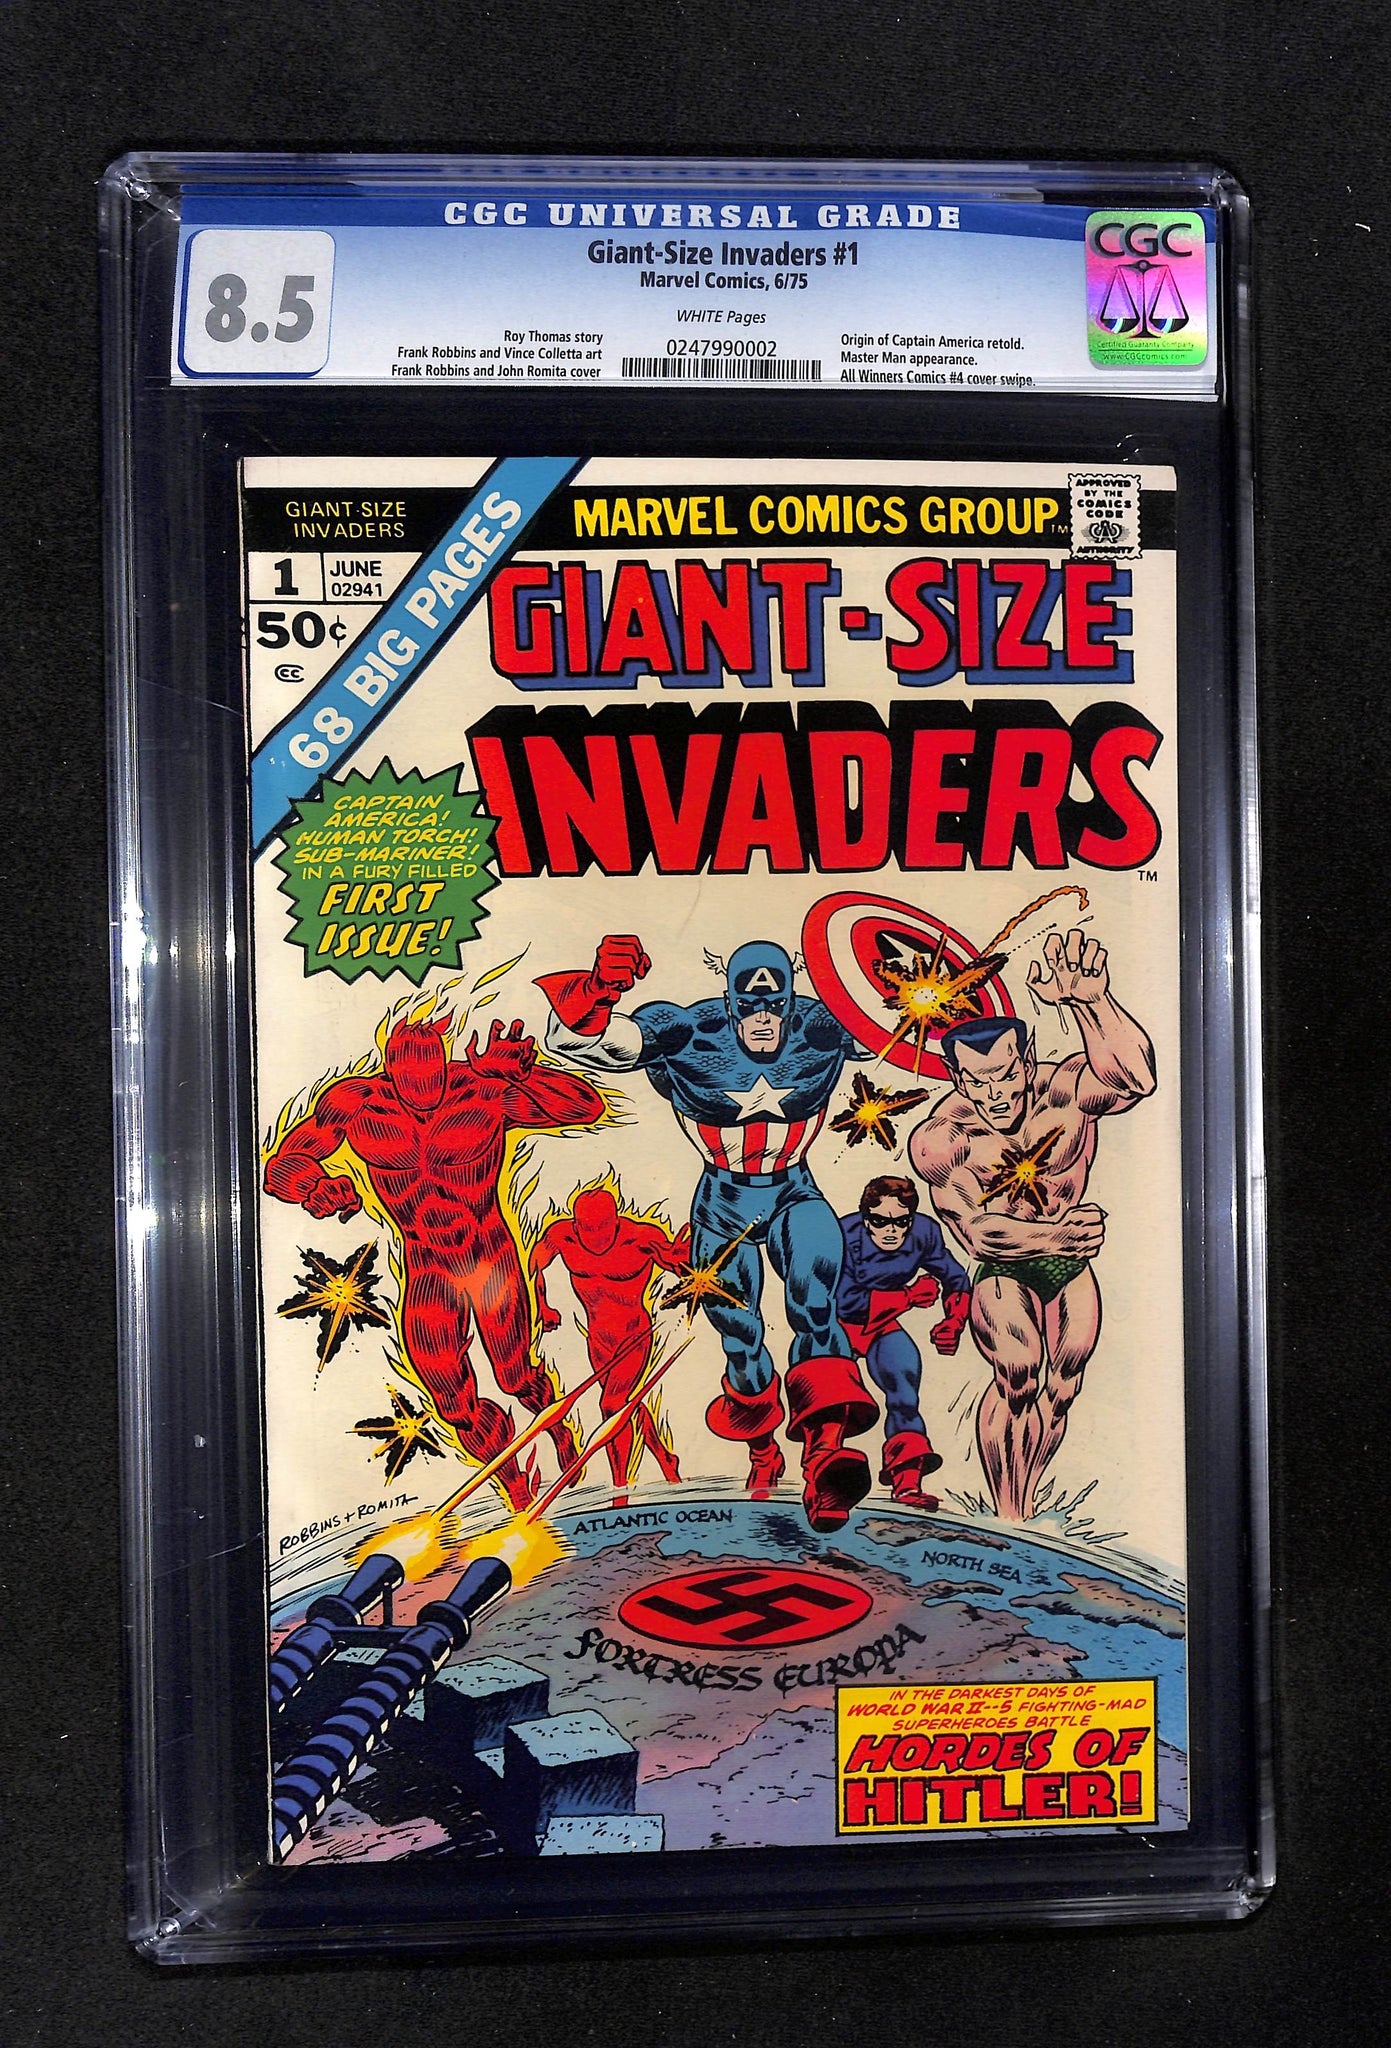 Giant-Size Invaders #1 CGC 8.5 Origin of Captain America Retold